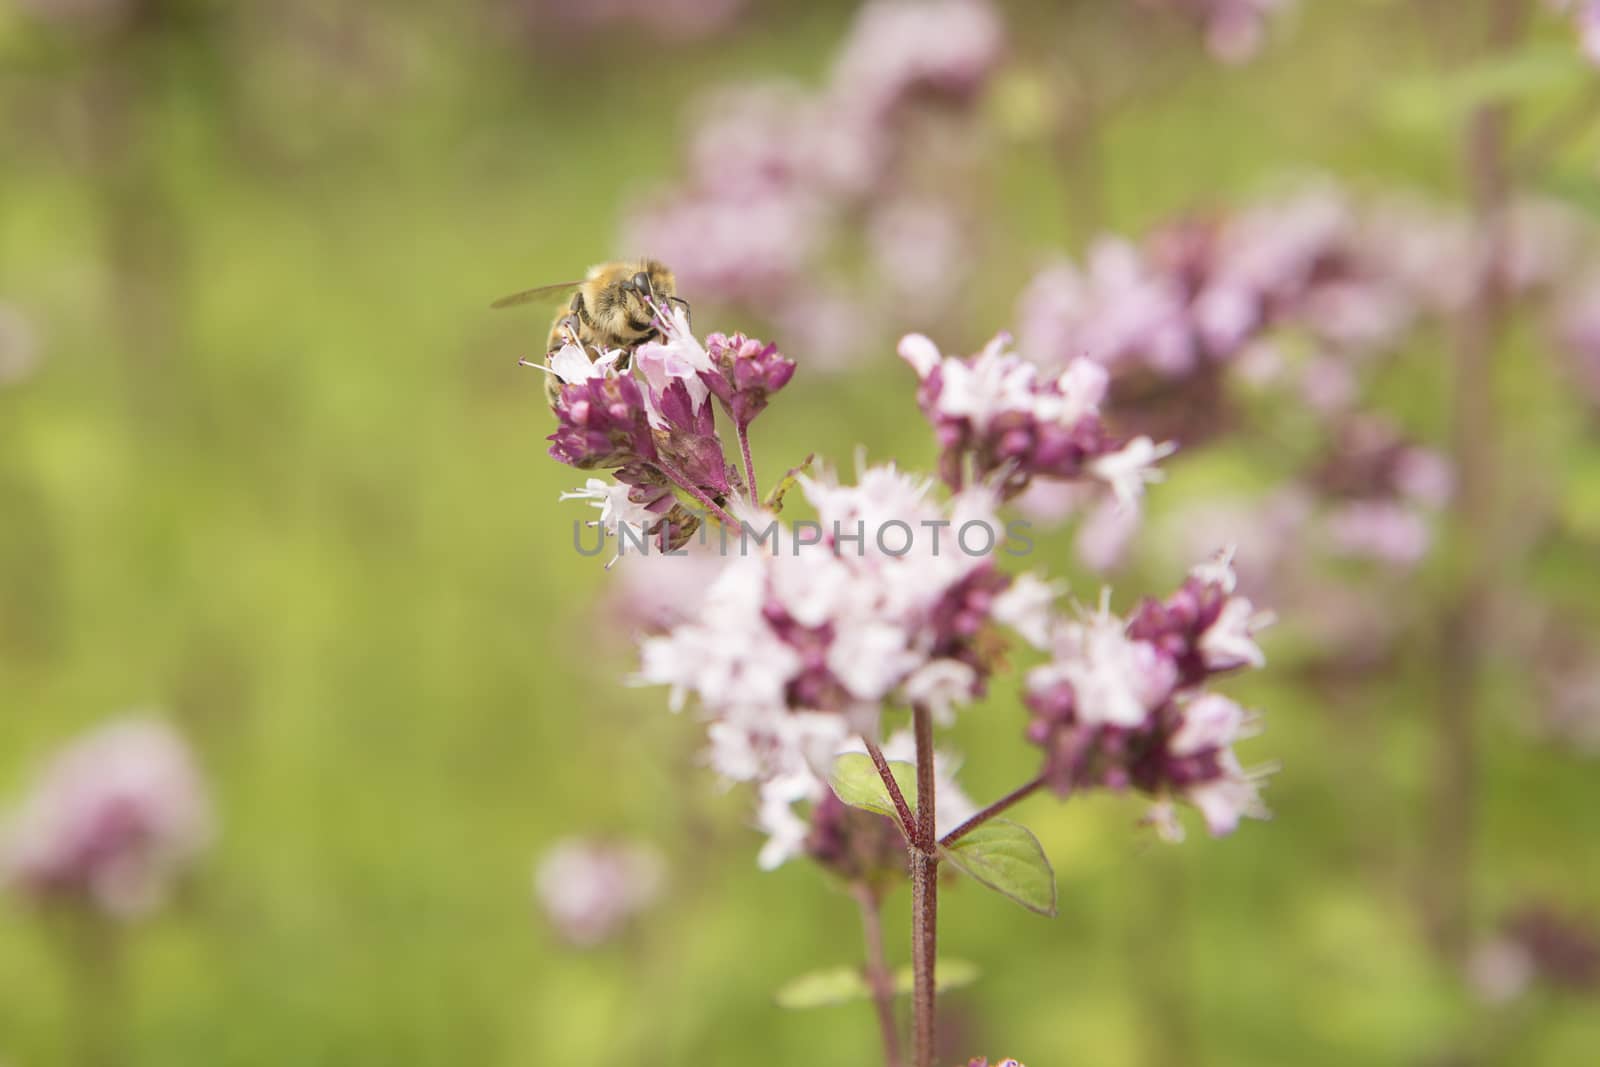 Honey bee takes pollen from purple flower